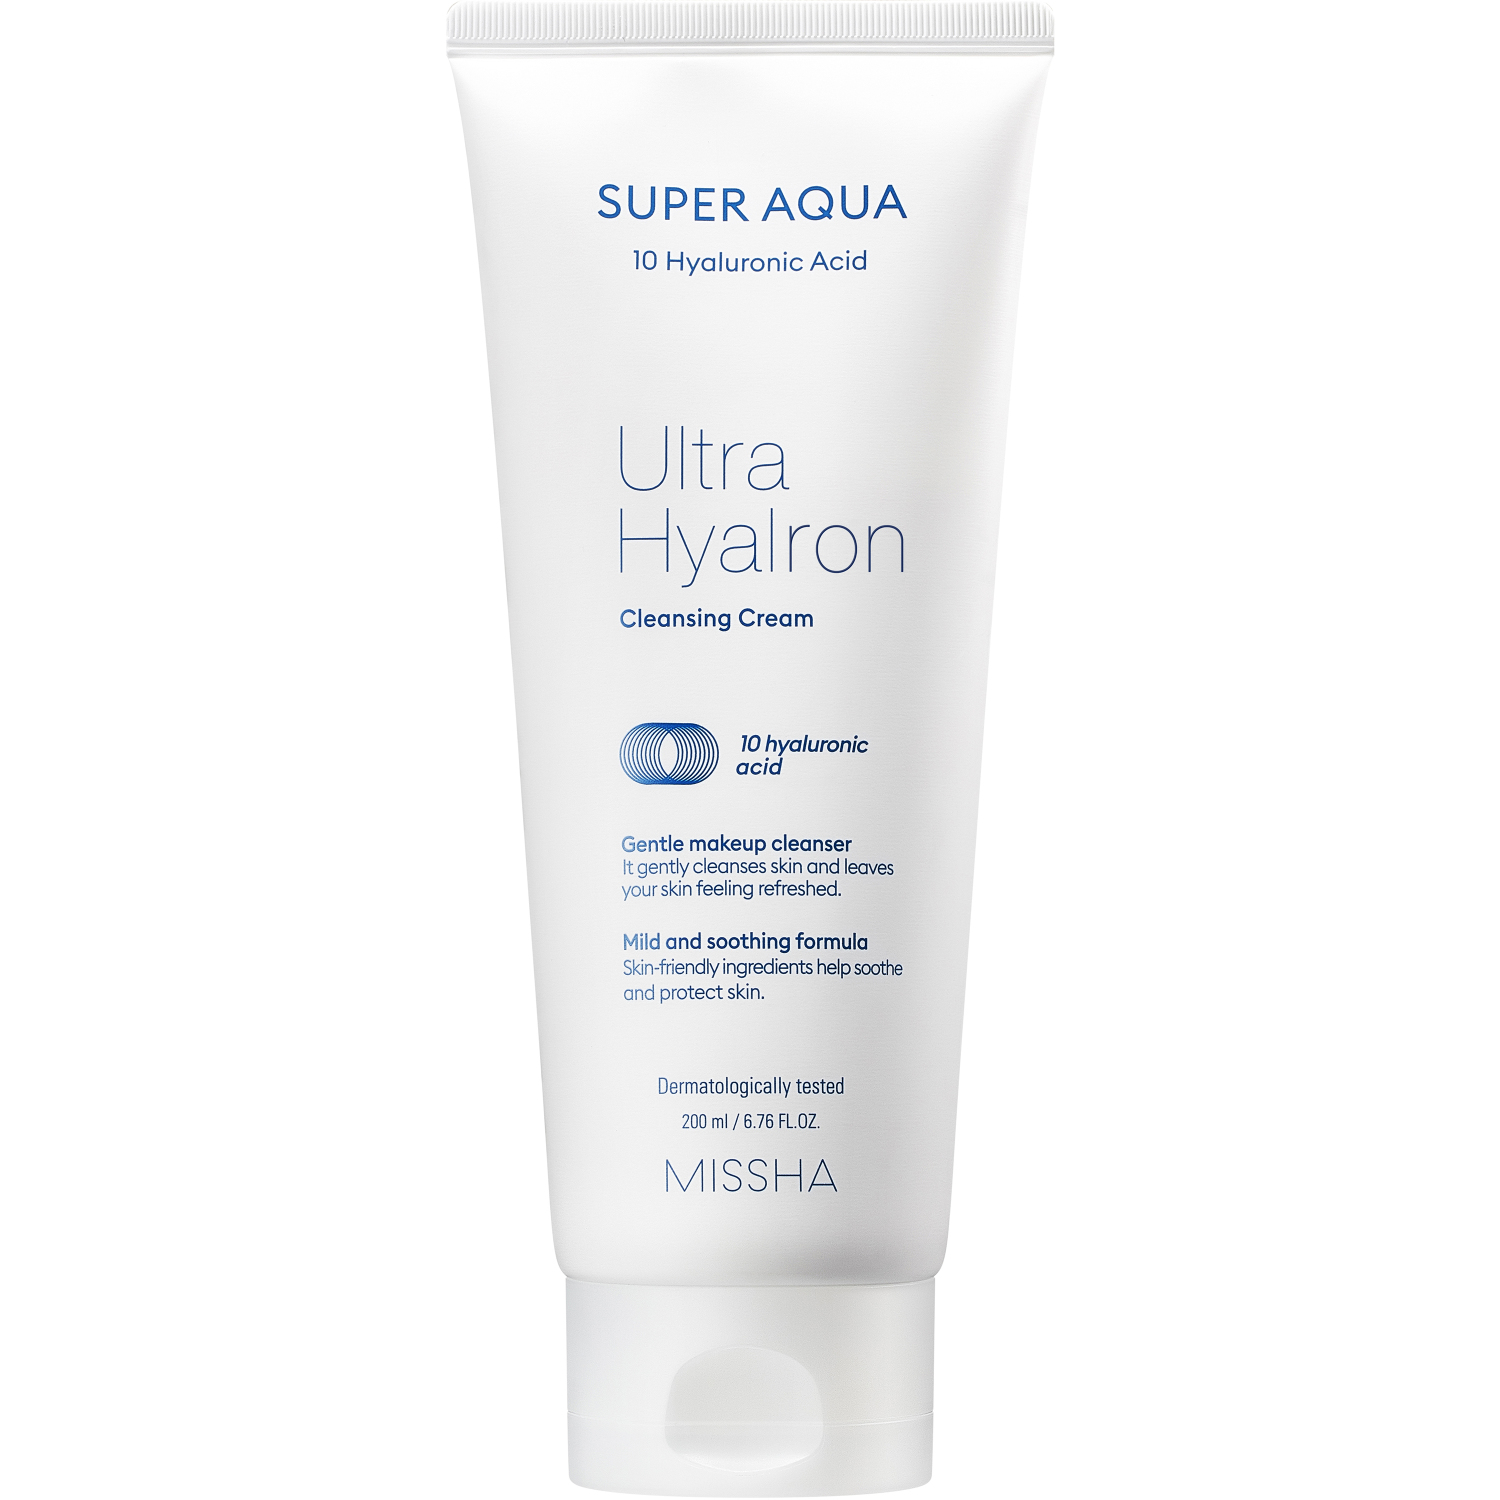 Пенка кремовая Missha Super Aqua Ultra Hyalron для умывания и снятия макияжа, 200 мл